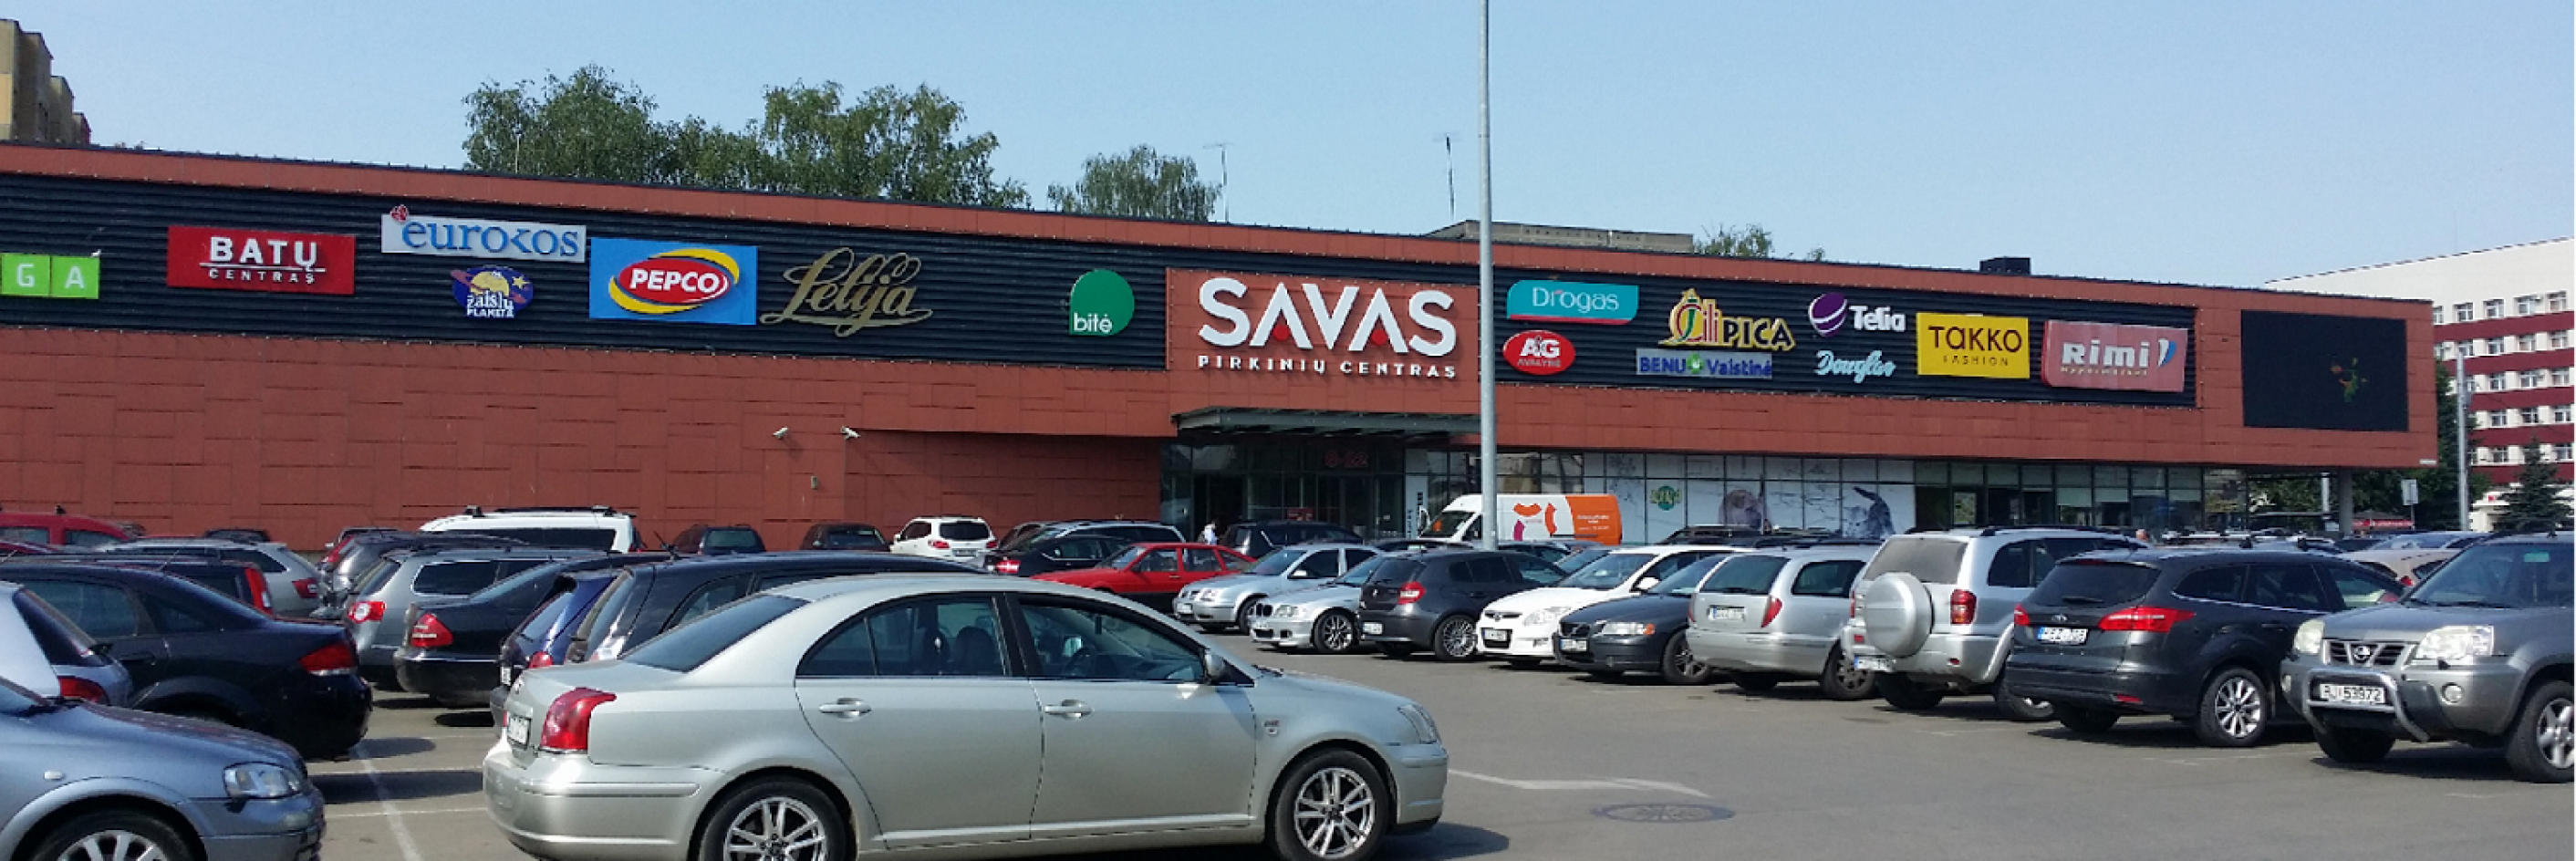 Savas-2824x944_2